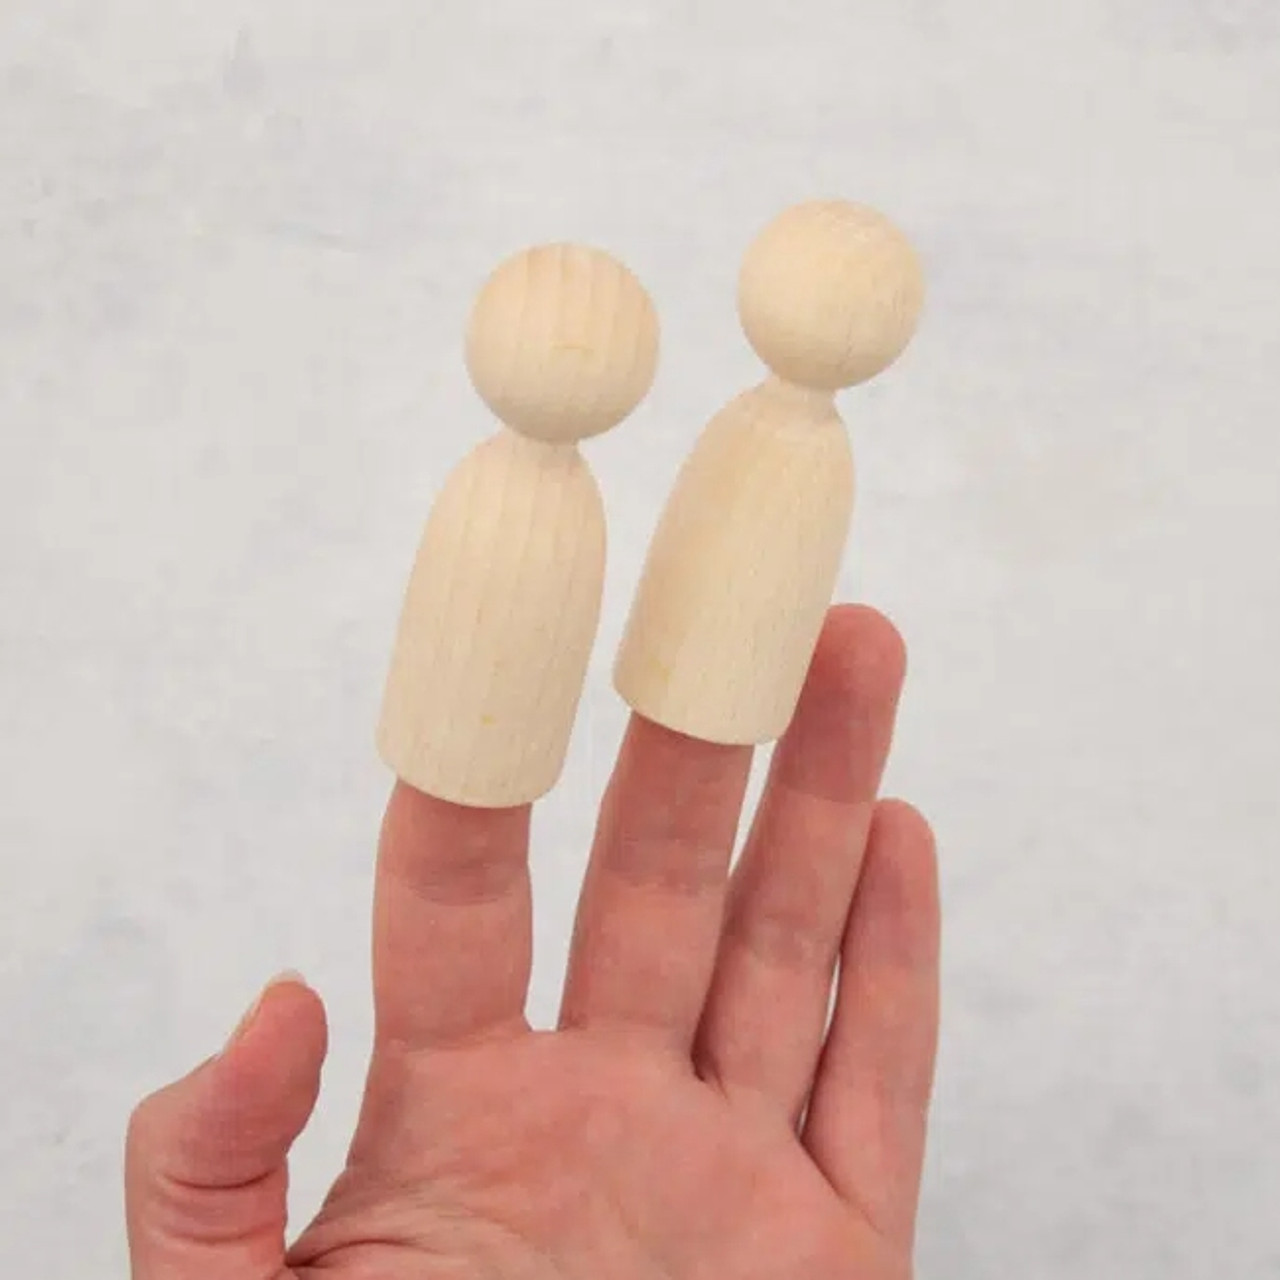 Woolpets Finger Puppets Needle Felting Kit